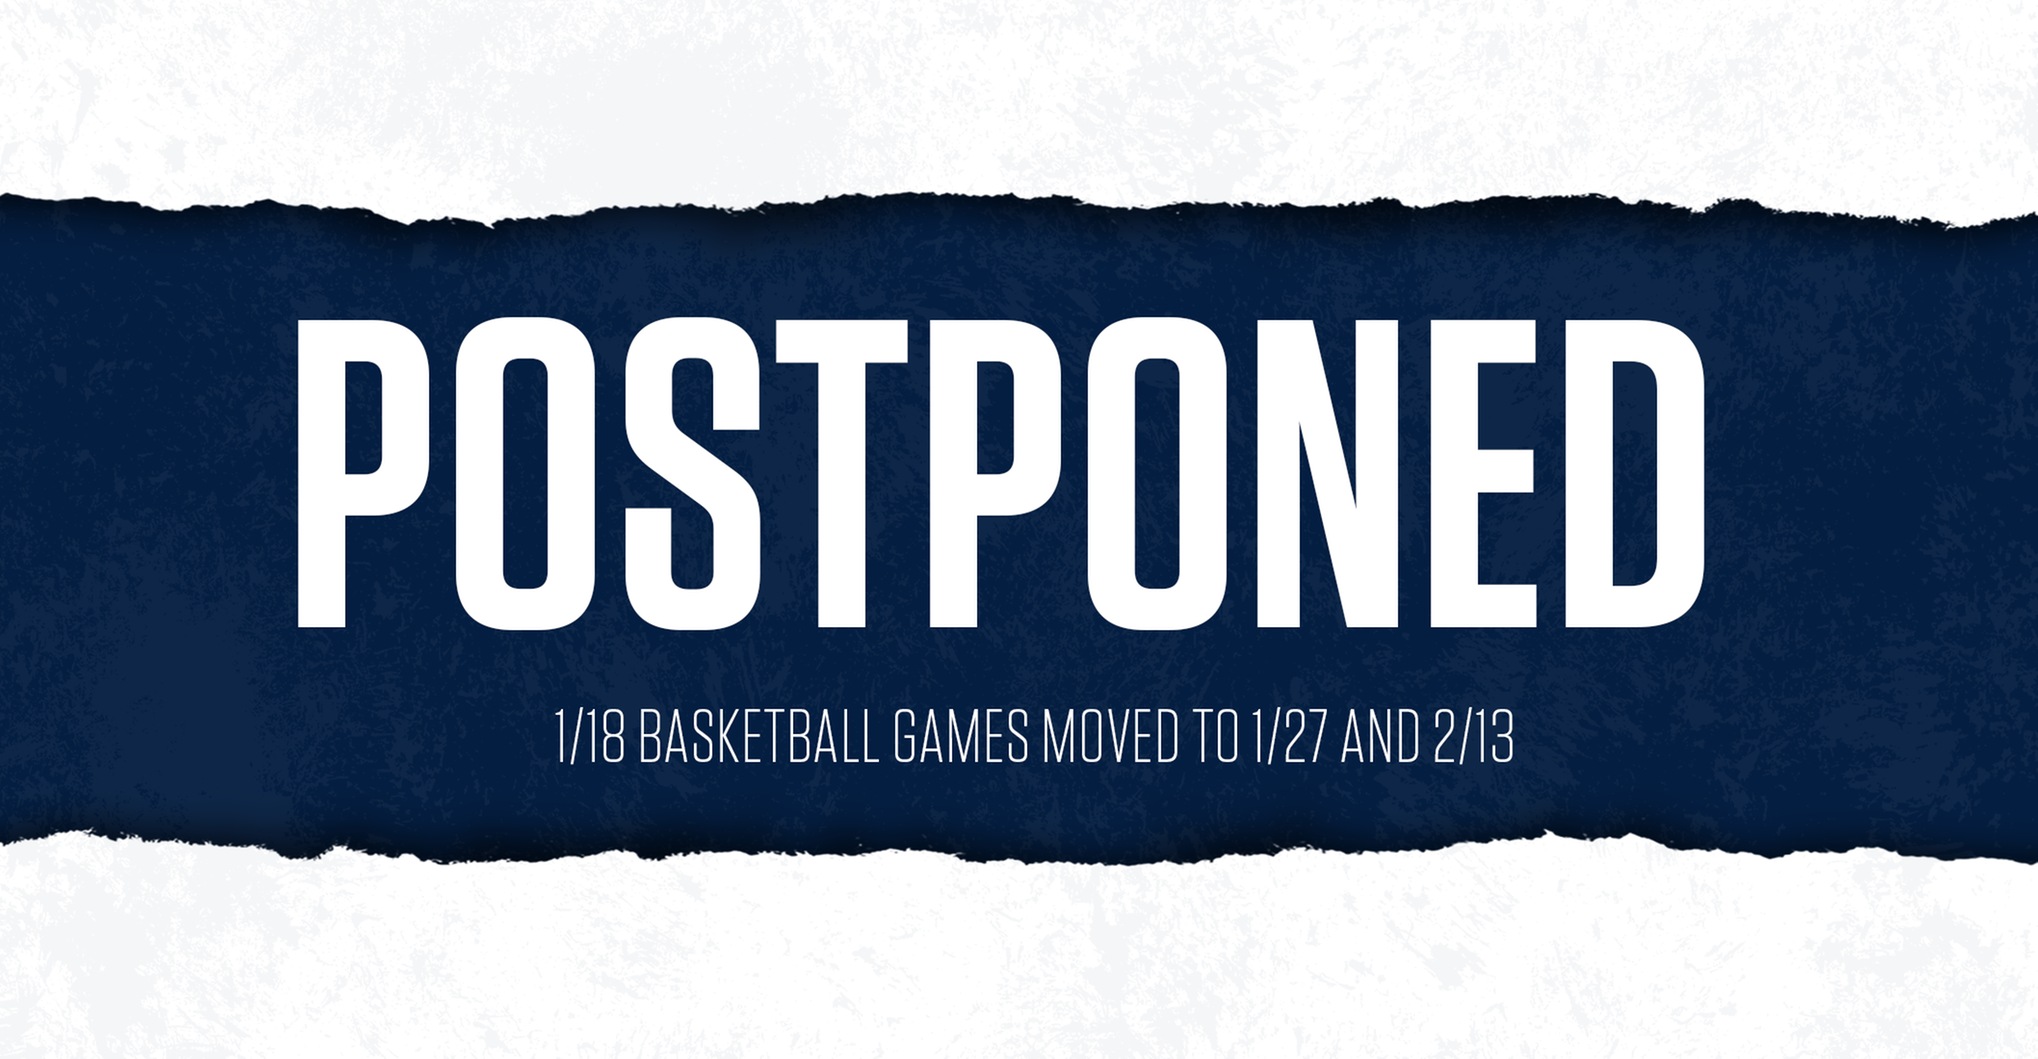 January 18 Basketball Games Postponed